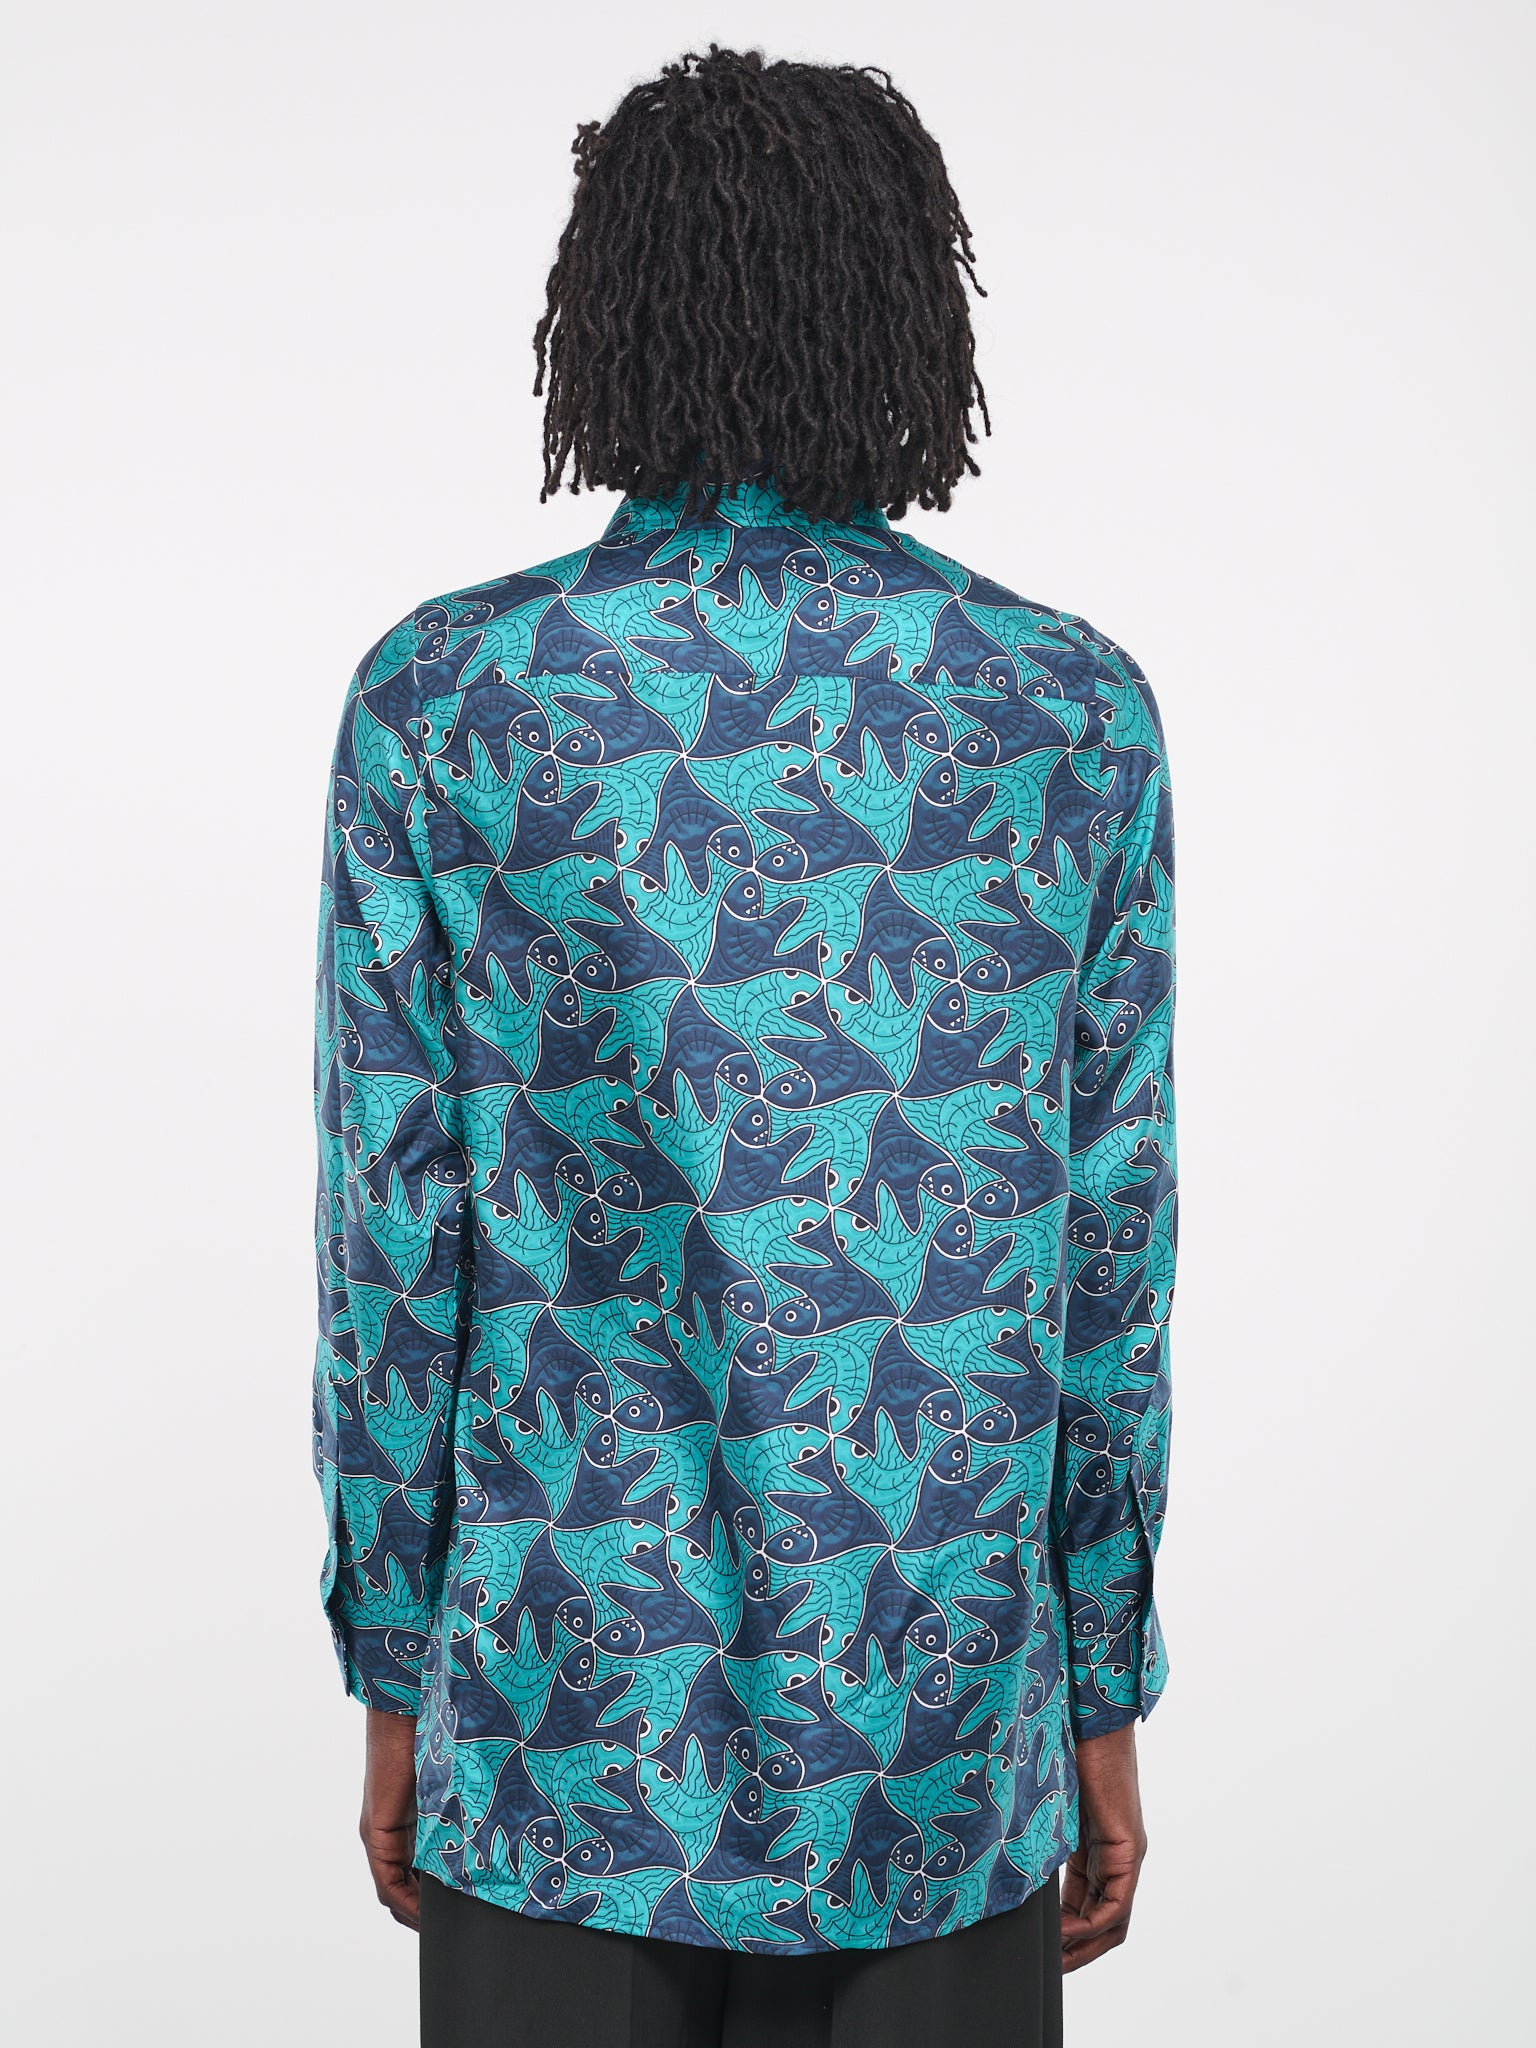 Fish Print Shirt (MN4028B-W110-BLUE-FISH-PRINT)